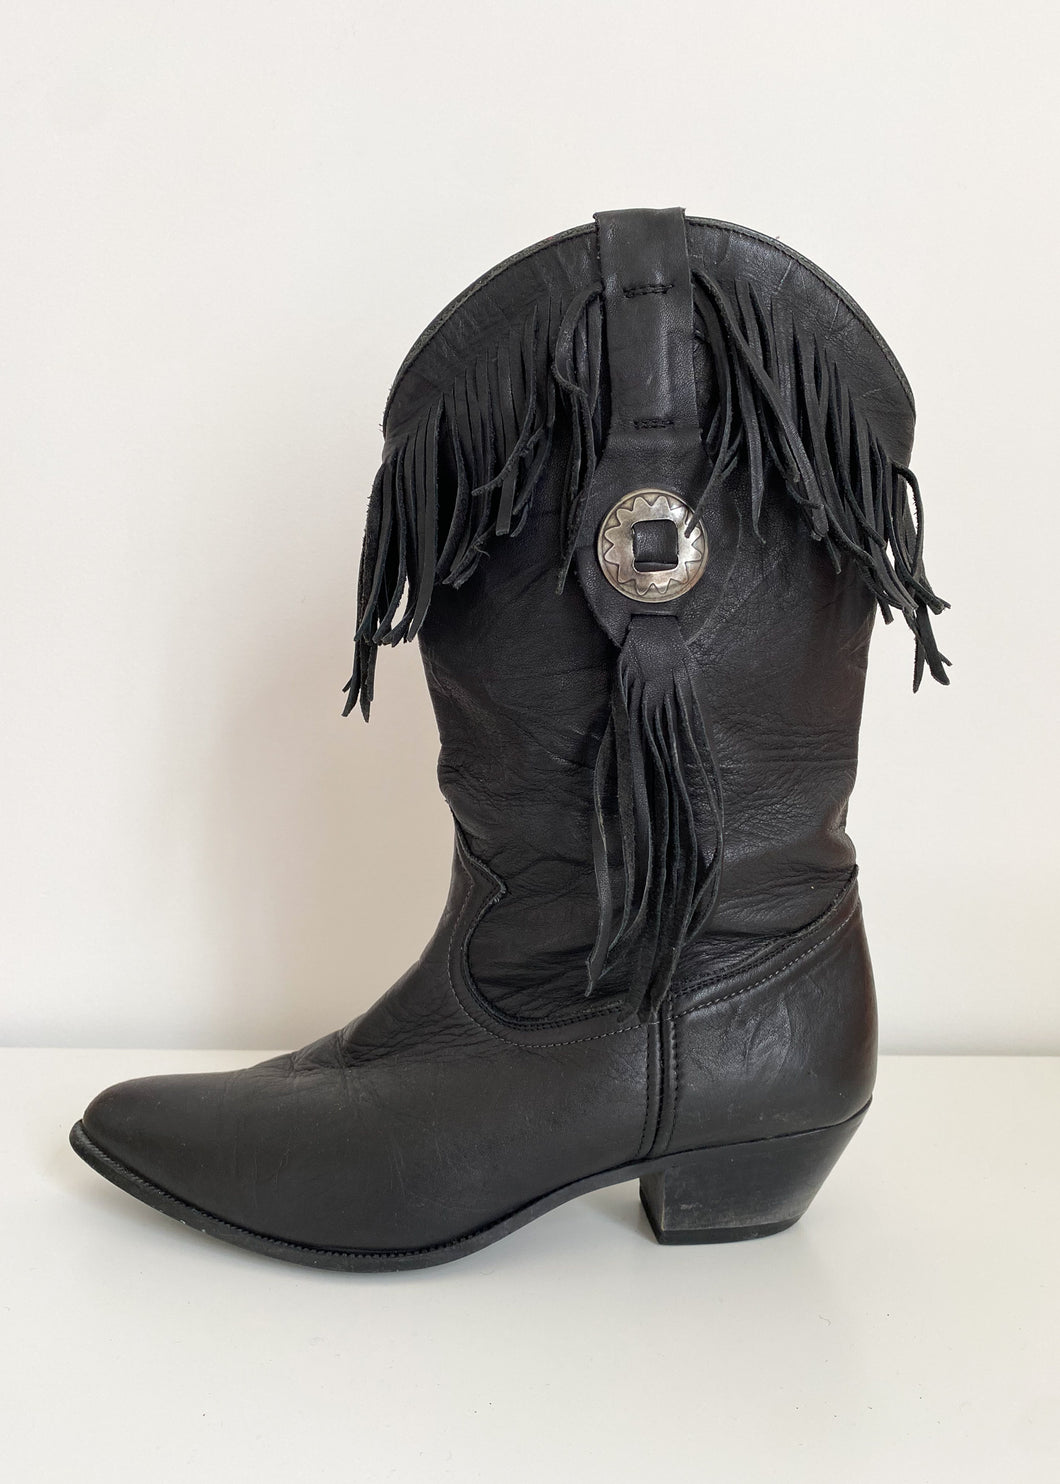 80's Black Fringe Cowboy Boots